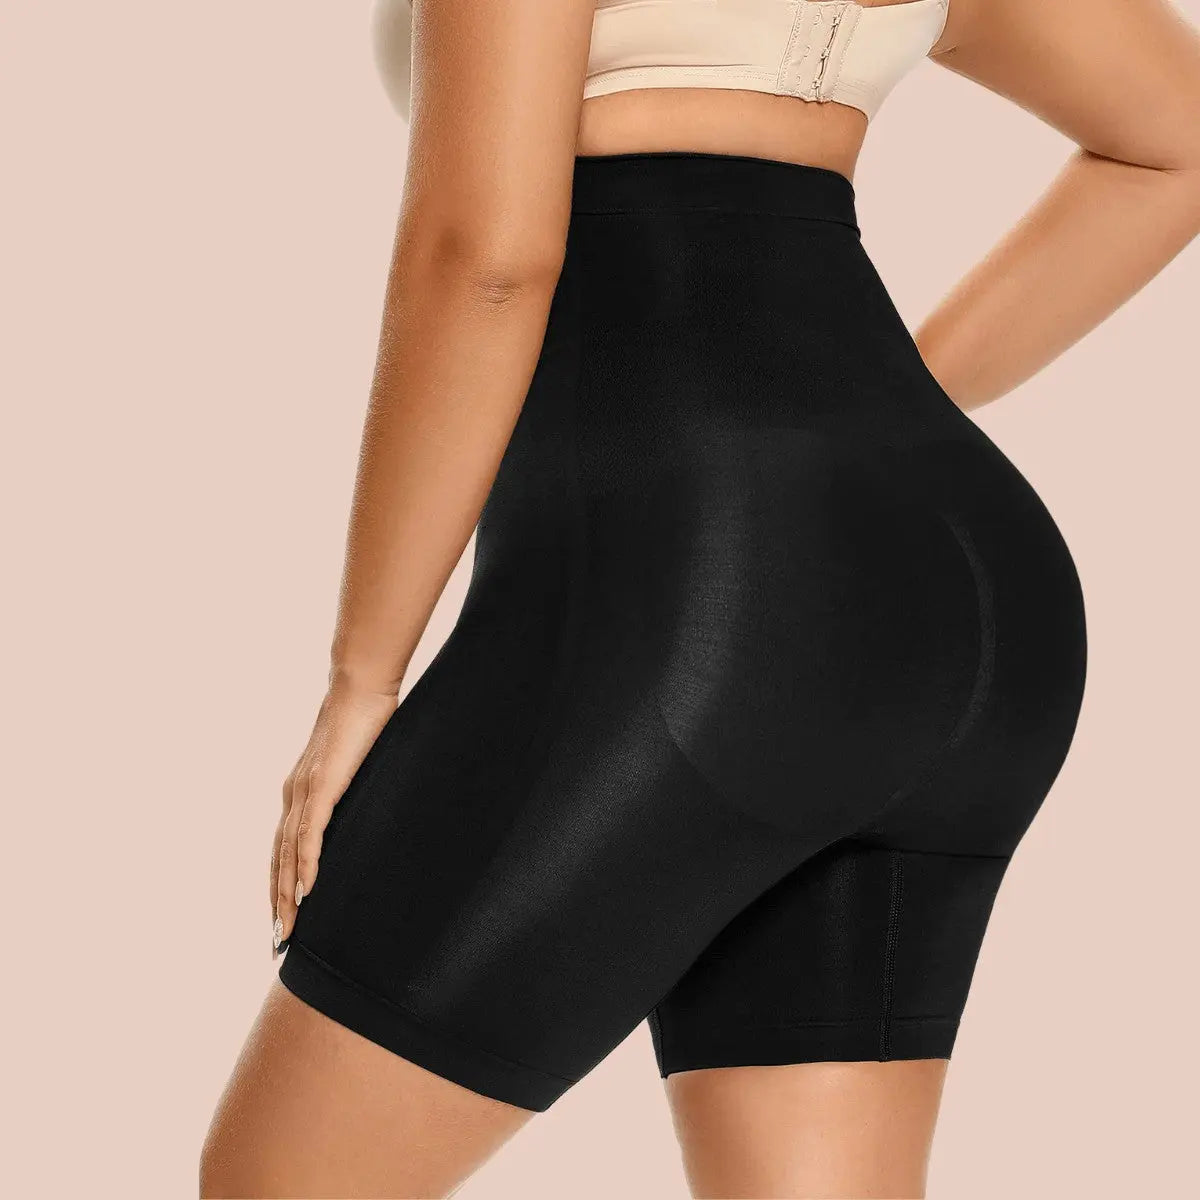 Shapewear for Women Tummy Control Shorts high Waist (Black,Size:L)